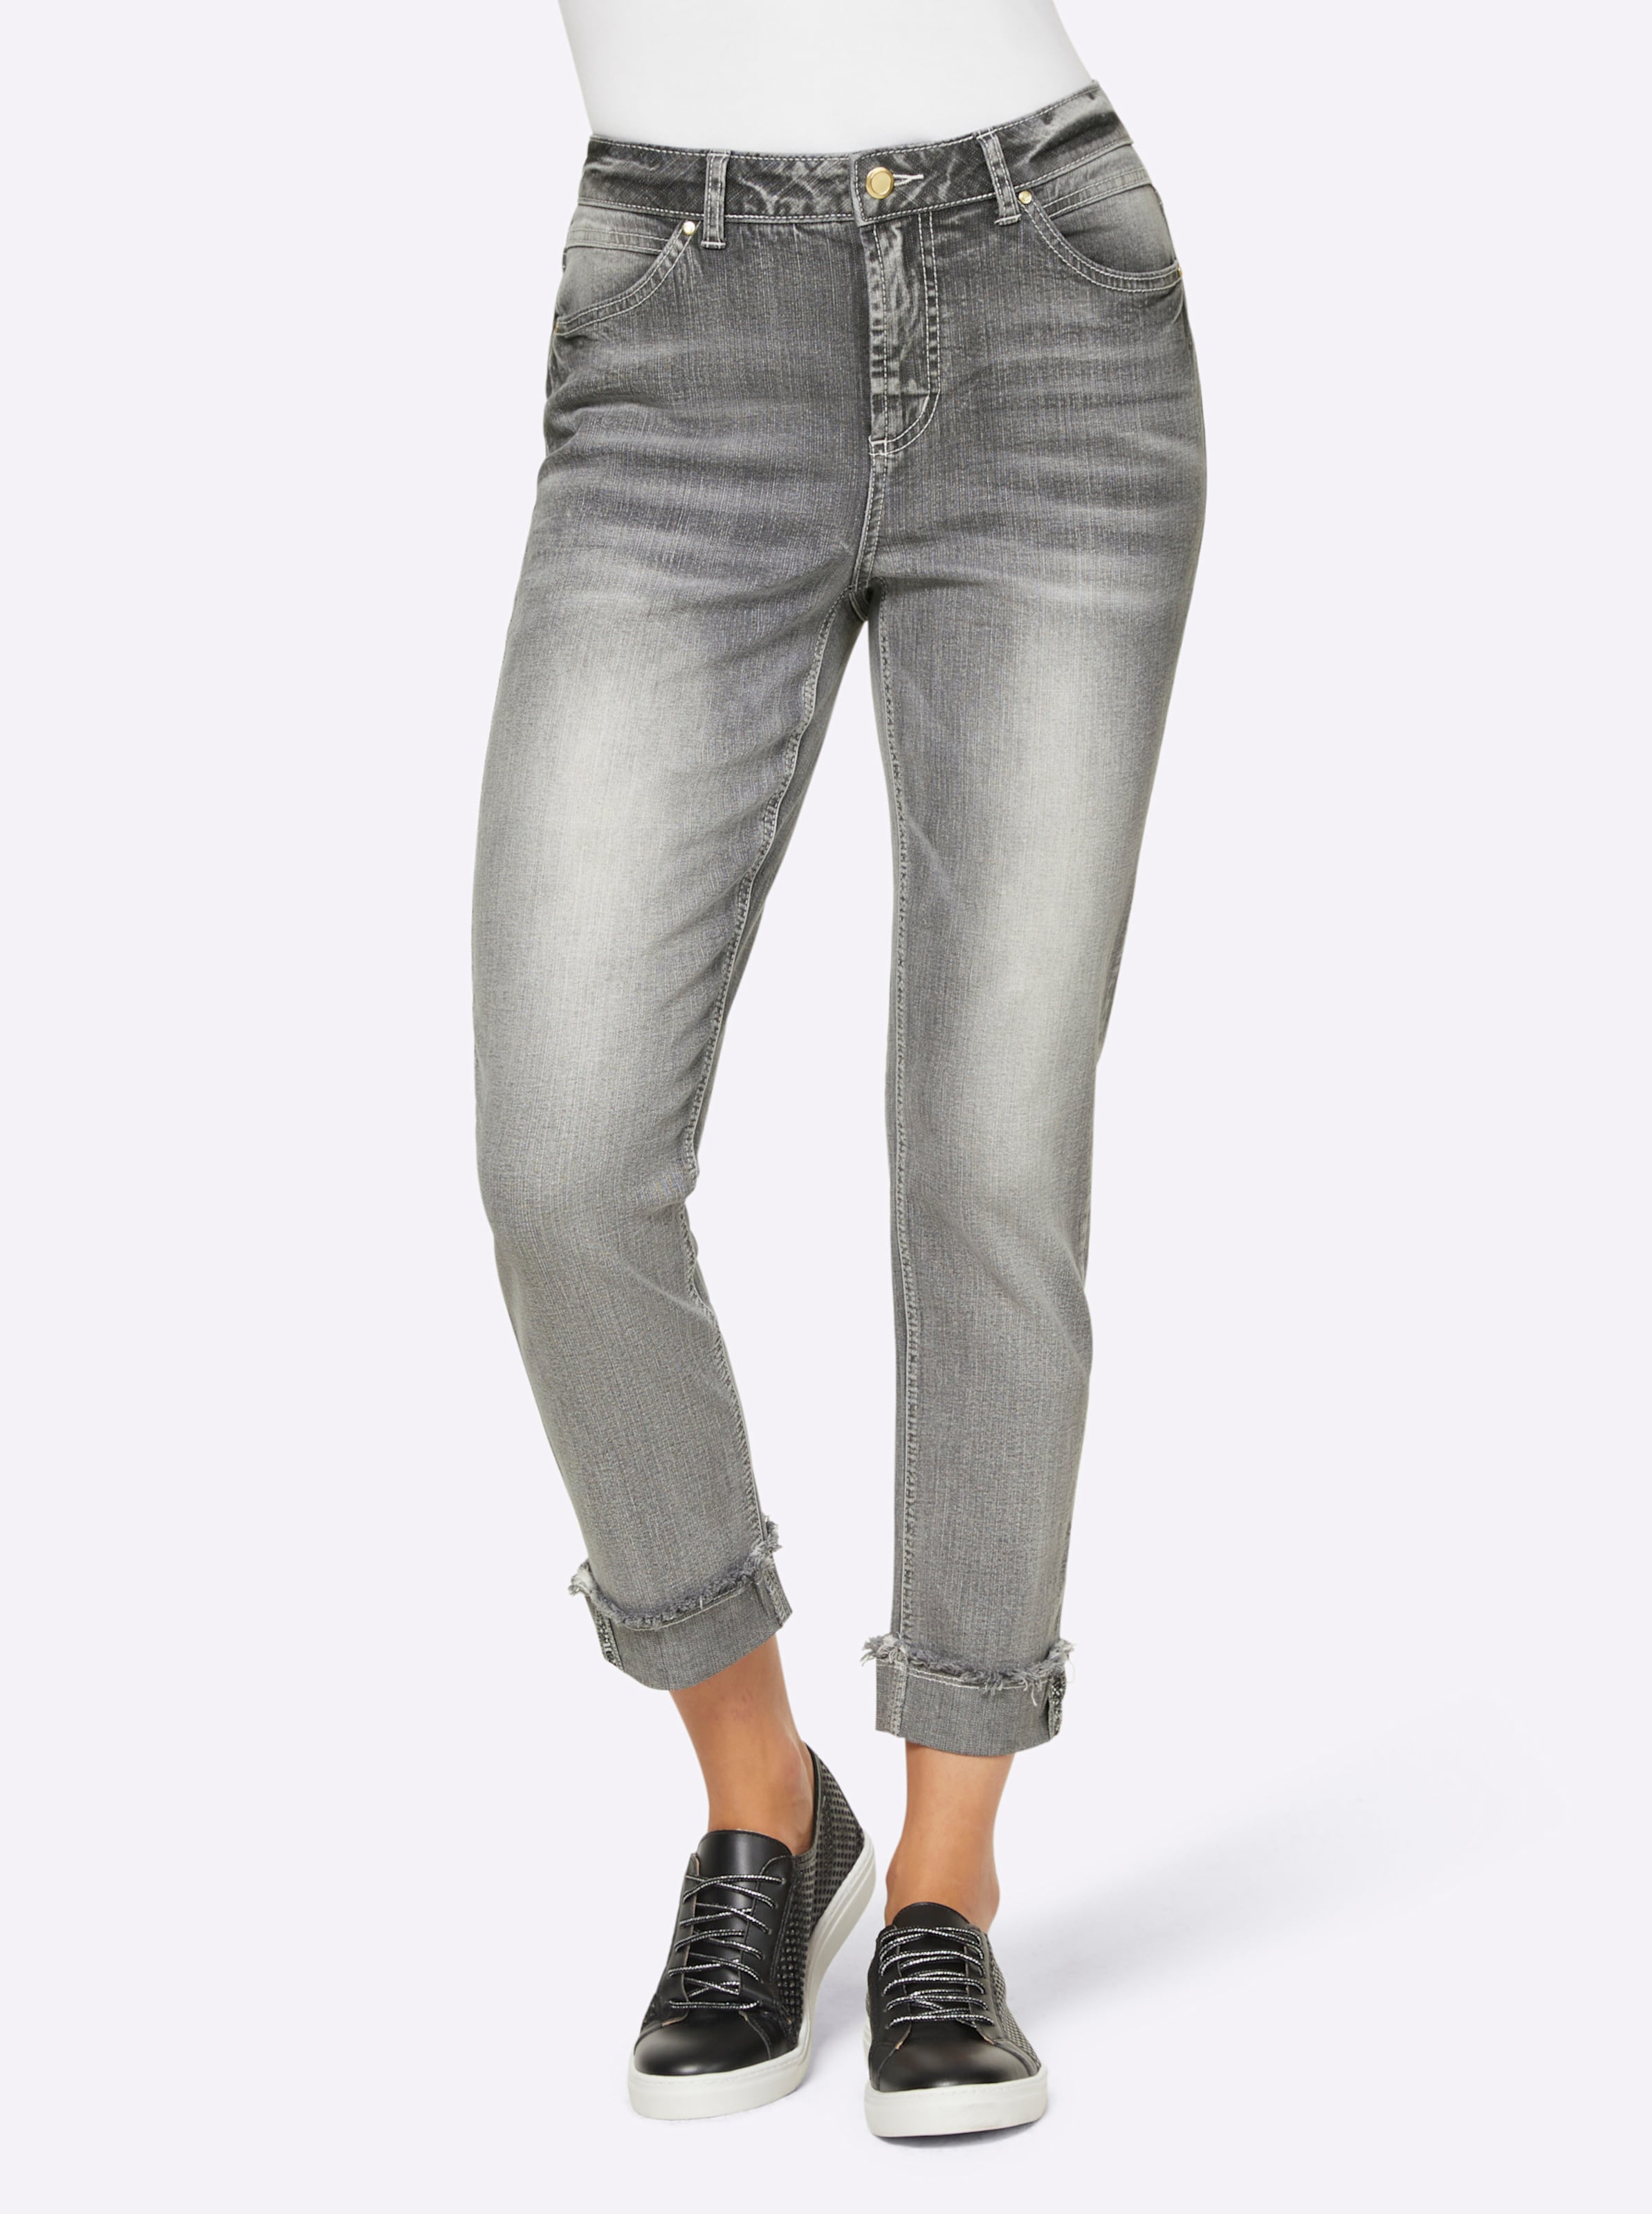 Witt Damen 7/8-Jeans, light grey-denim